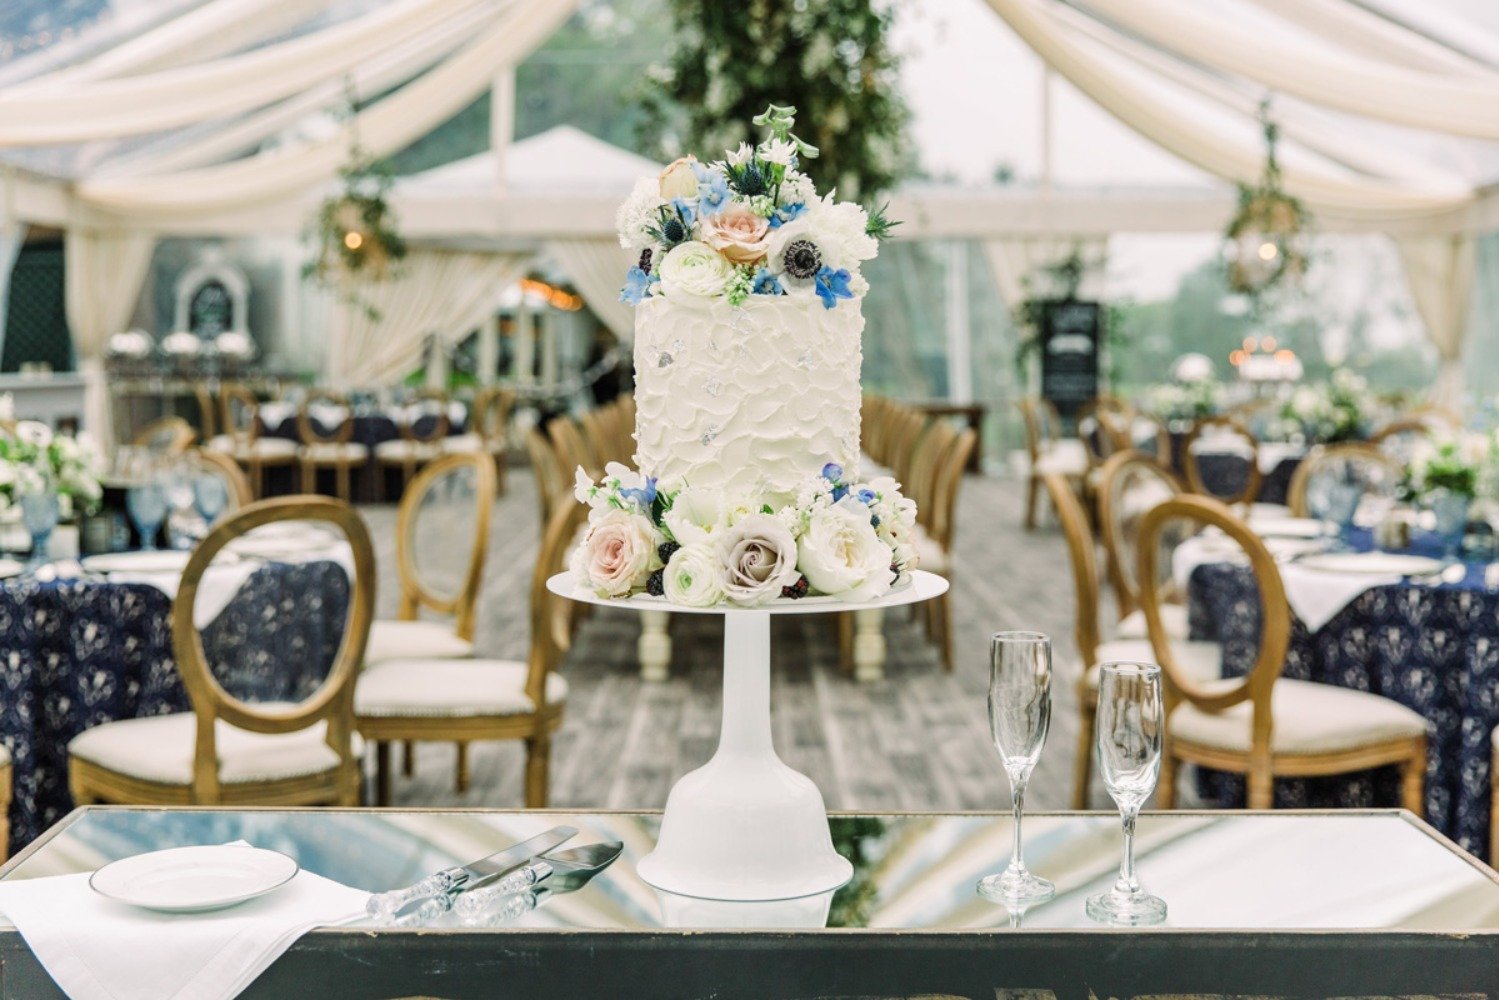 Chic mini wedding cake